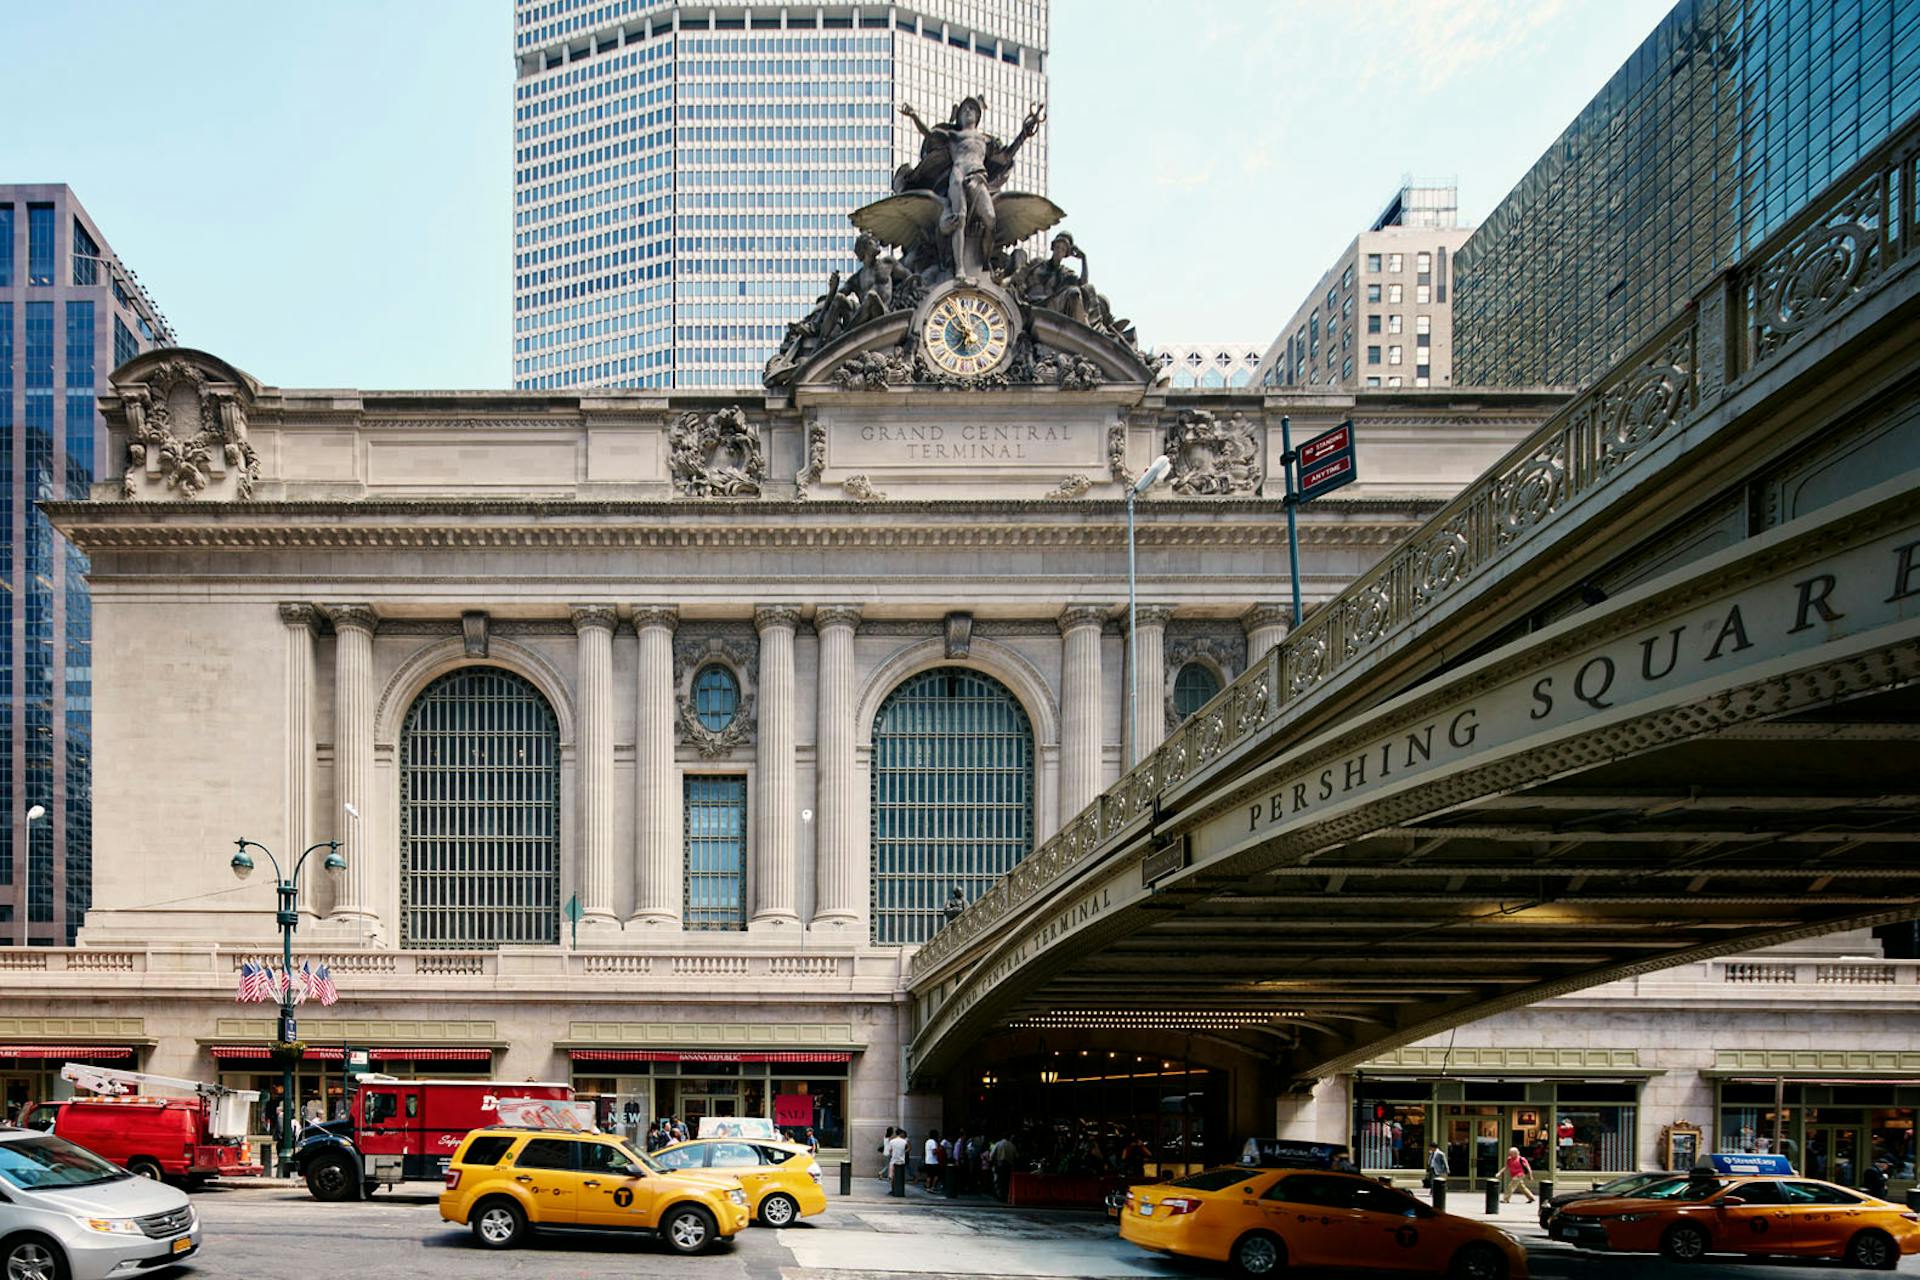 Центральный терминал. Гранд централ Нью-Йорк. Центральный вокзал Нью-Йорка Нью-Йорк. Вокзал Grand Central в Нью-Йорке. Центральный Железнодорожный вокзал Нью Йорк.